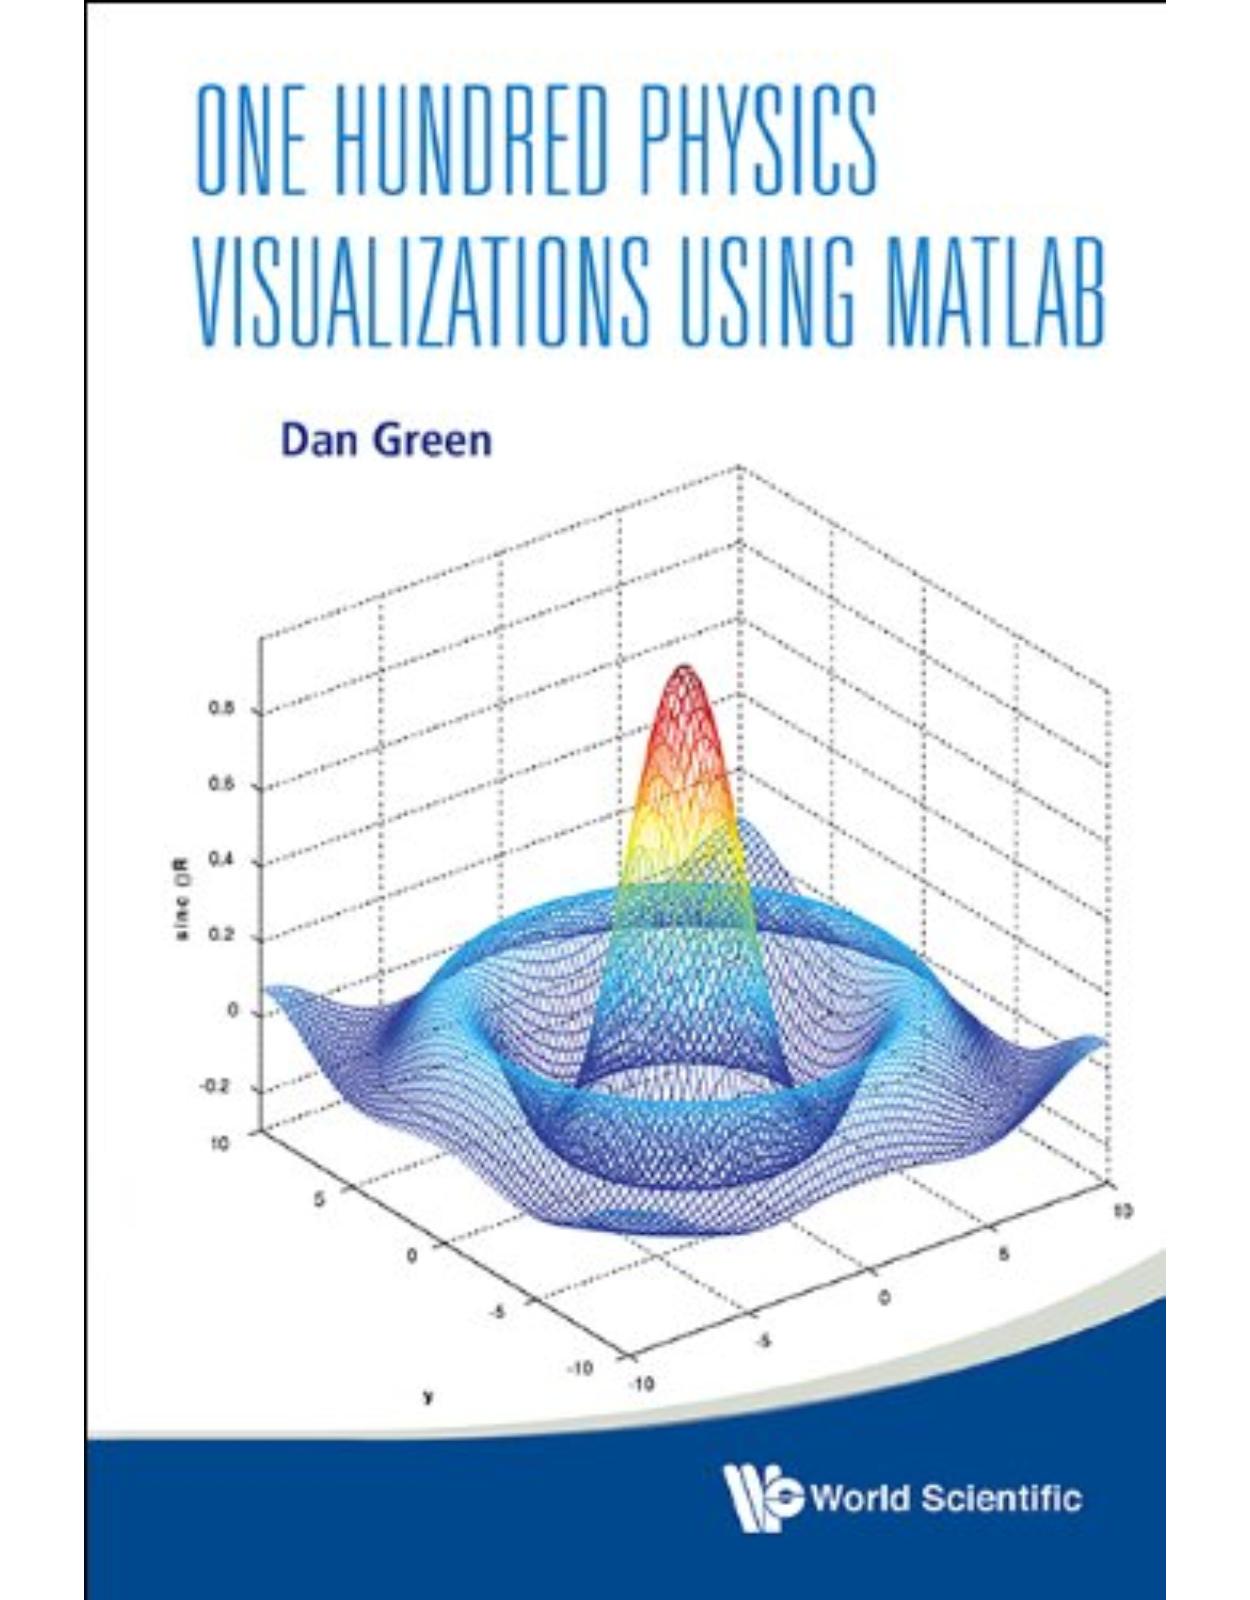 One Hundred Physics Visualizations Using MATLAB